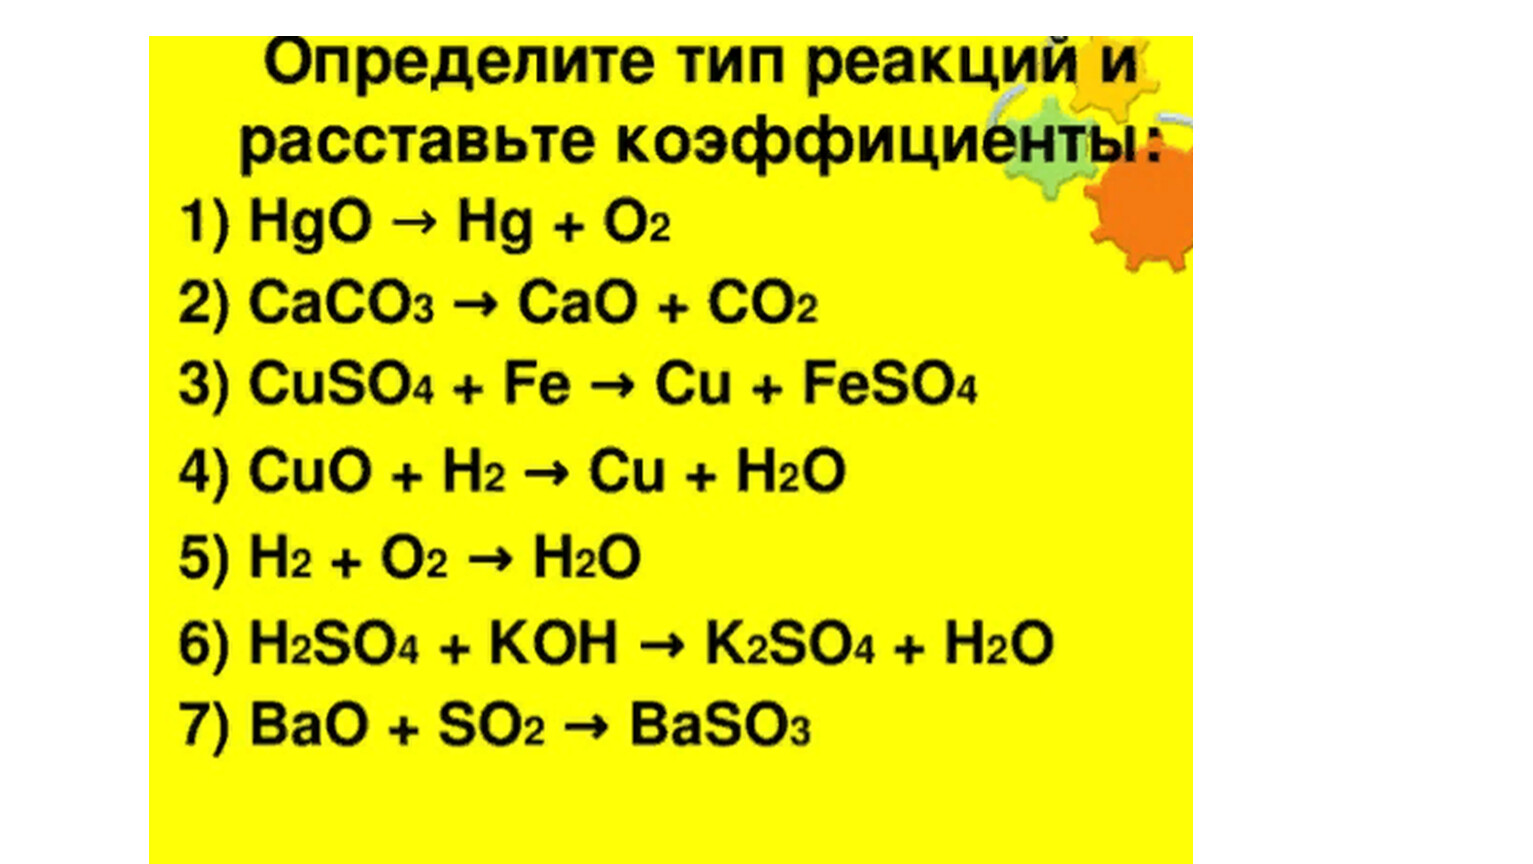 Fe k2co3 h2o. Caco3 cao co2 Тип реакции. Расставьте коэффициент и определит Тип рякции. Расставить коэффициенты и определить Тип химической реакции. Расставьте коэффициенты и определите Тип химической реакции.